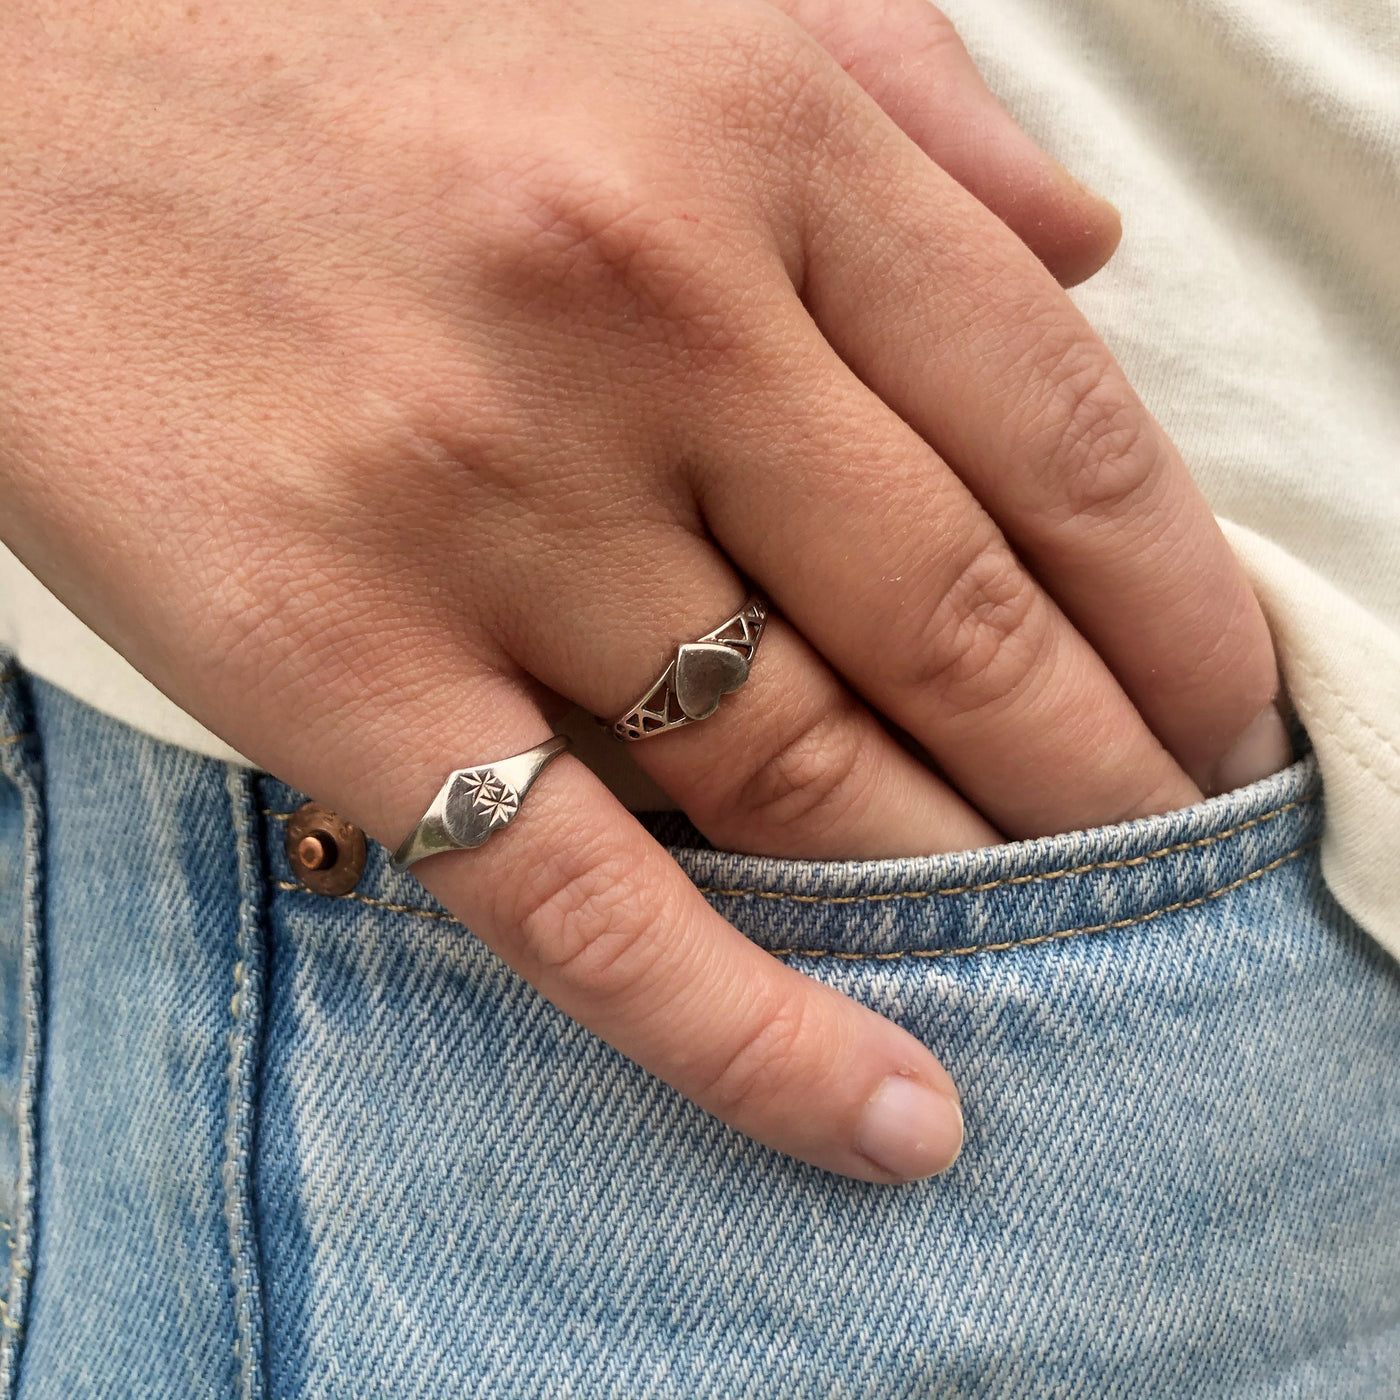 'Sophia' Vintage Heart Signet Ring